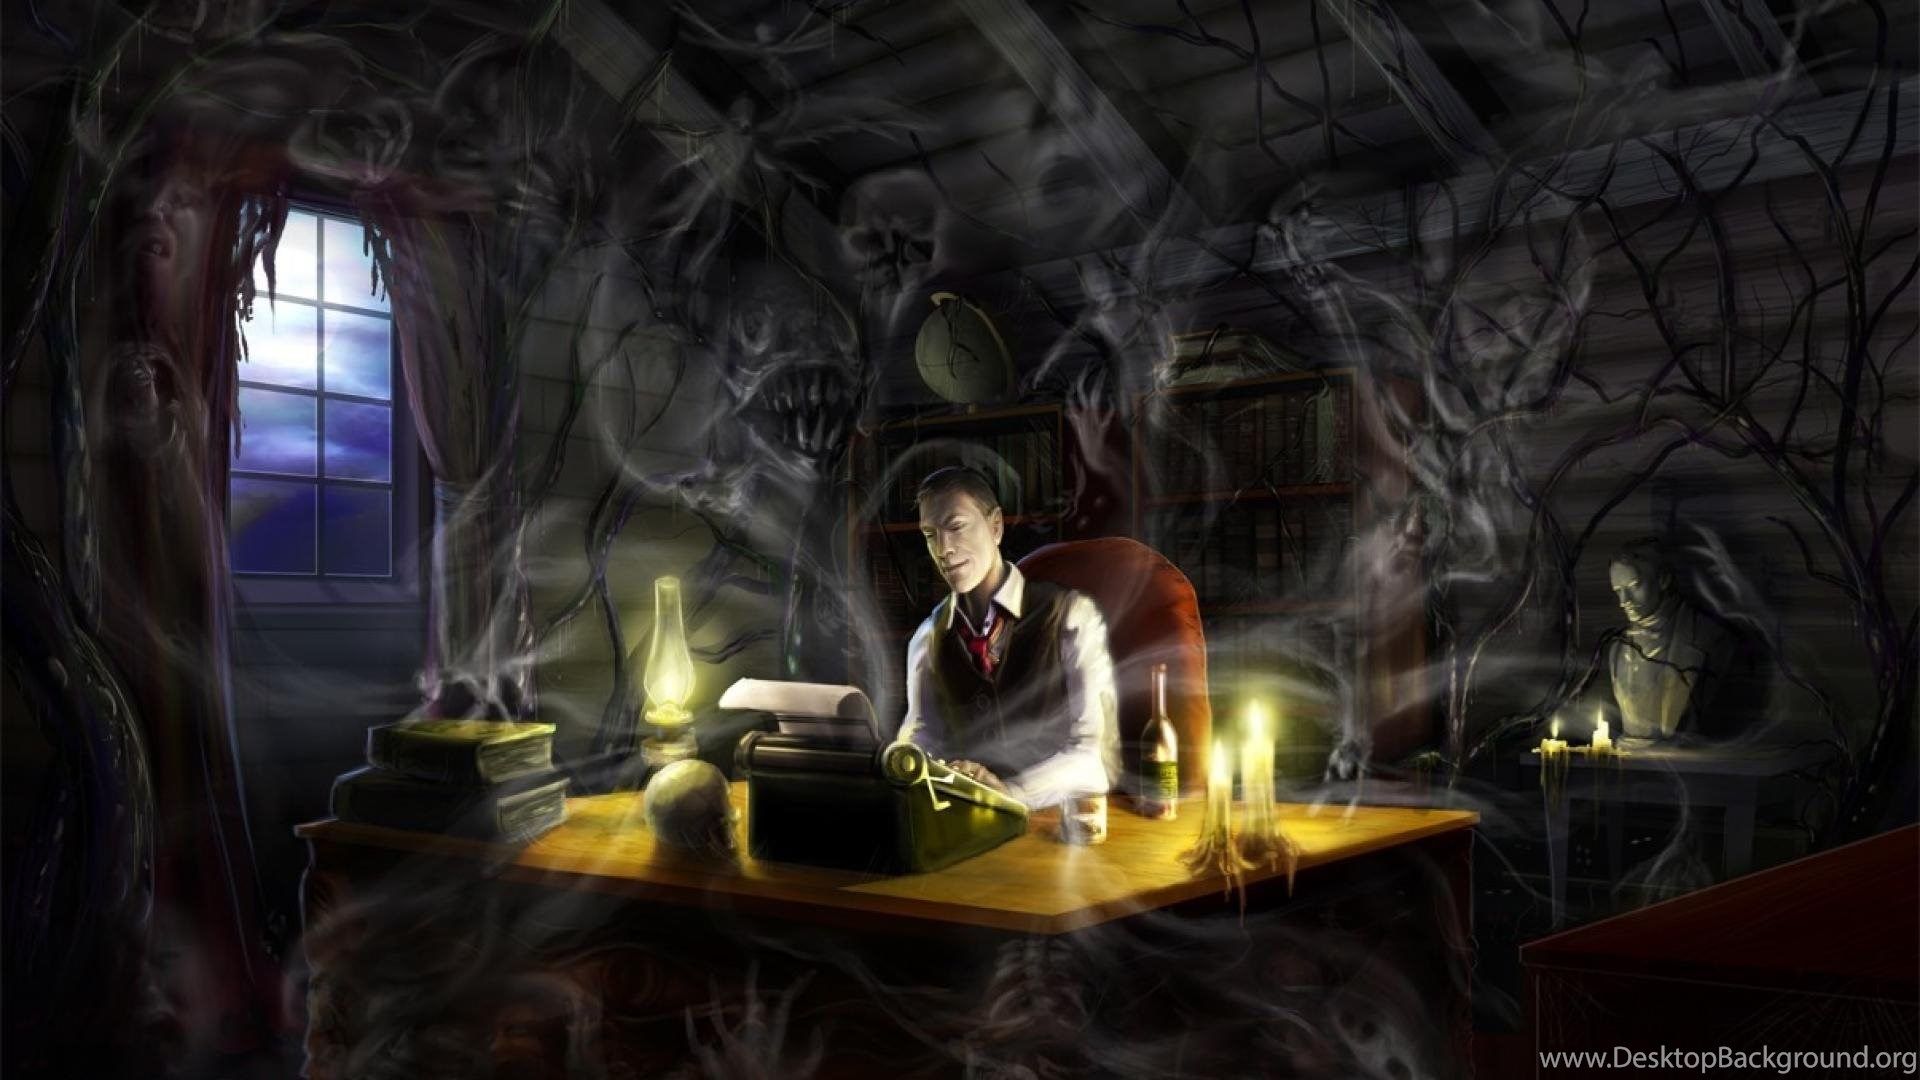 Horror Hp Lovecraft Artwork Macabre Wallpaper Desktop Background